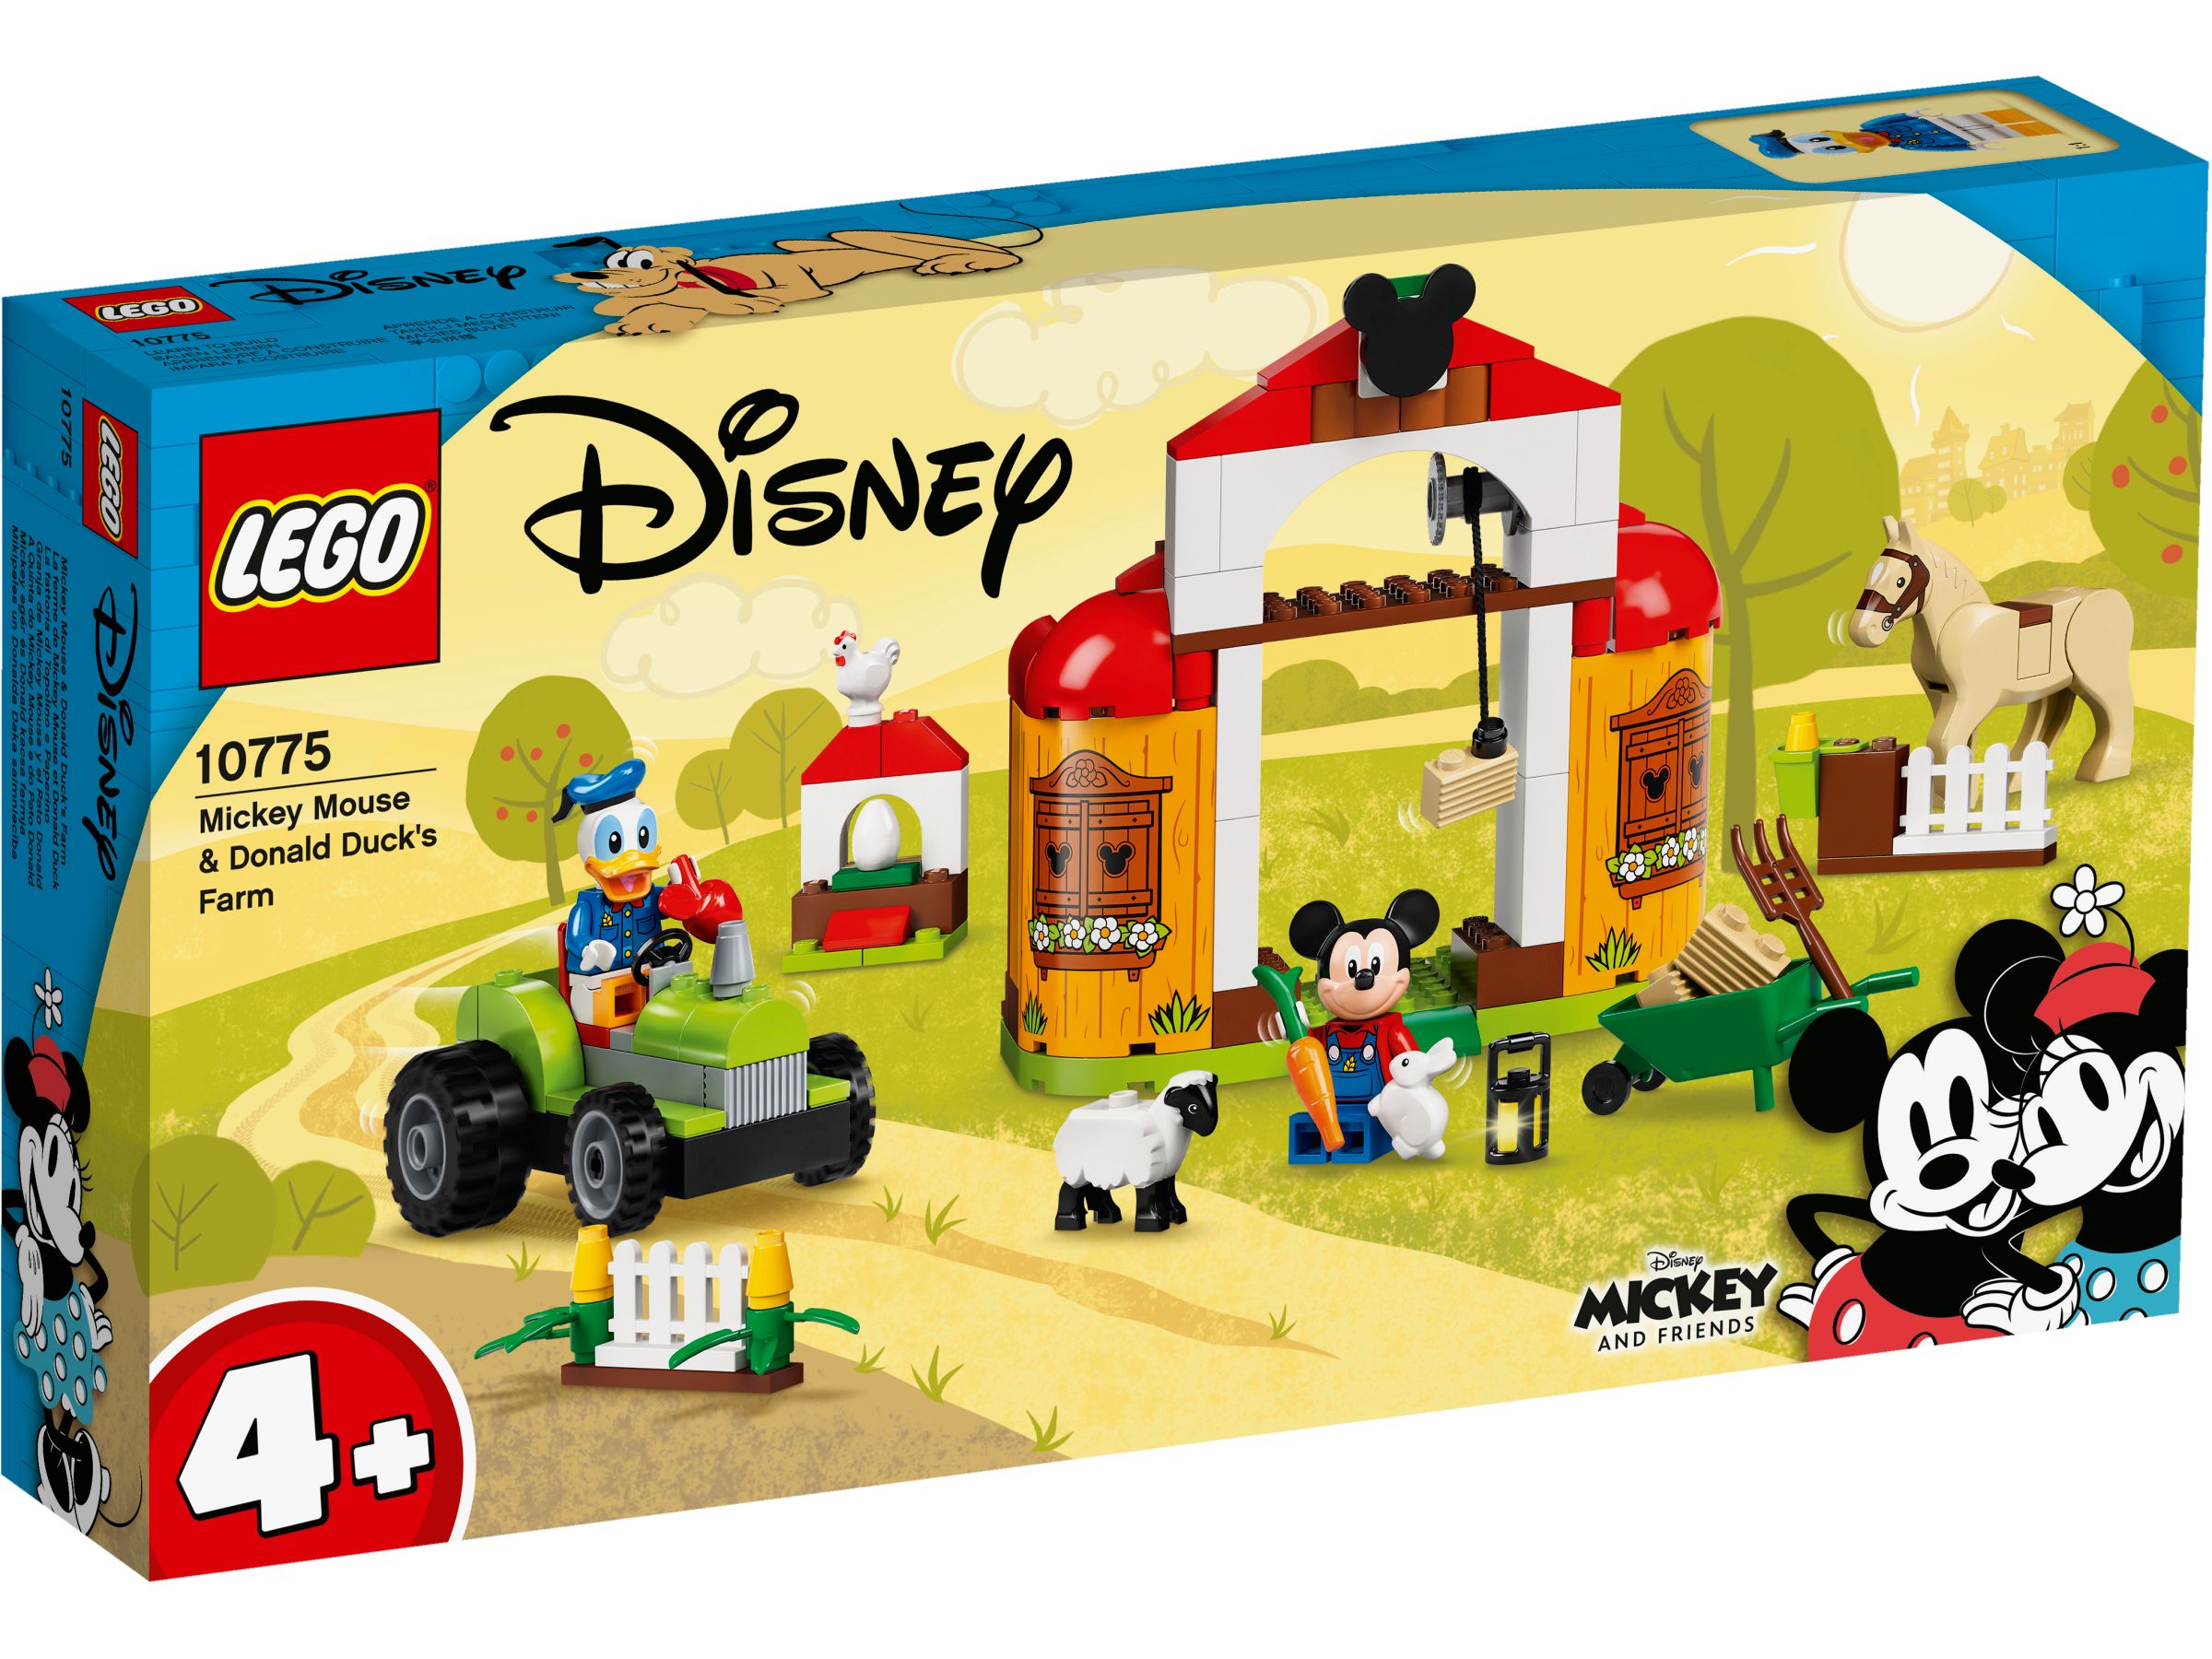 LEGO Disney 10775 Mickys und Donald Duck's Farm LEGO_10775_box1_v29.jpg